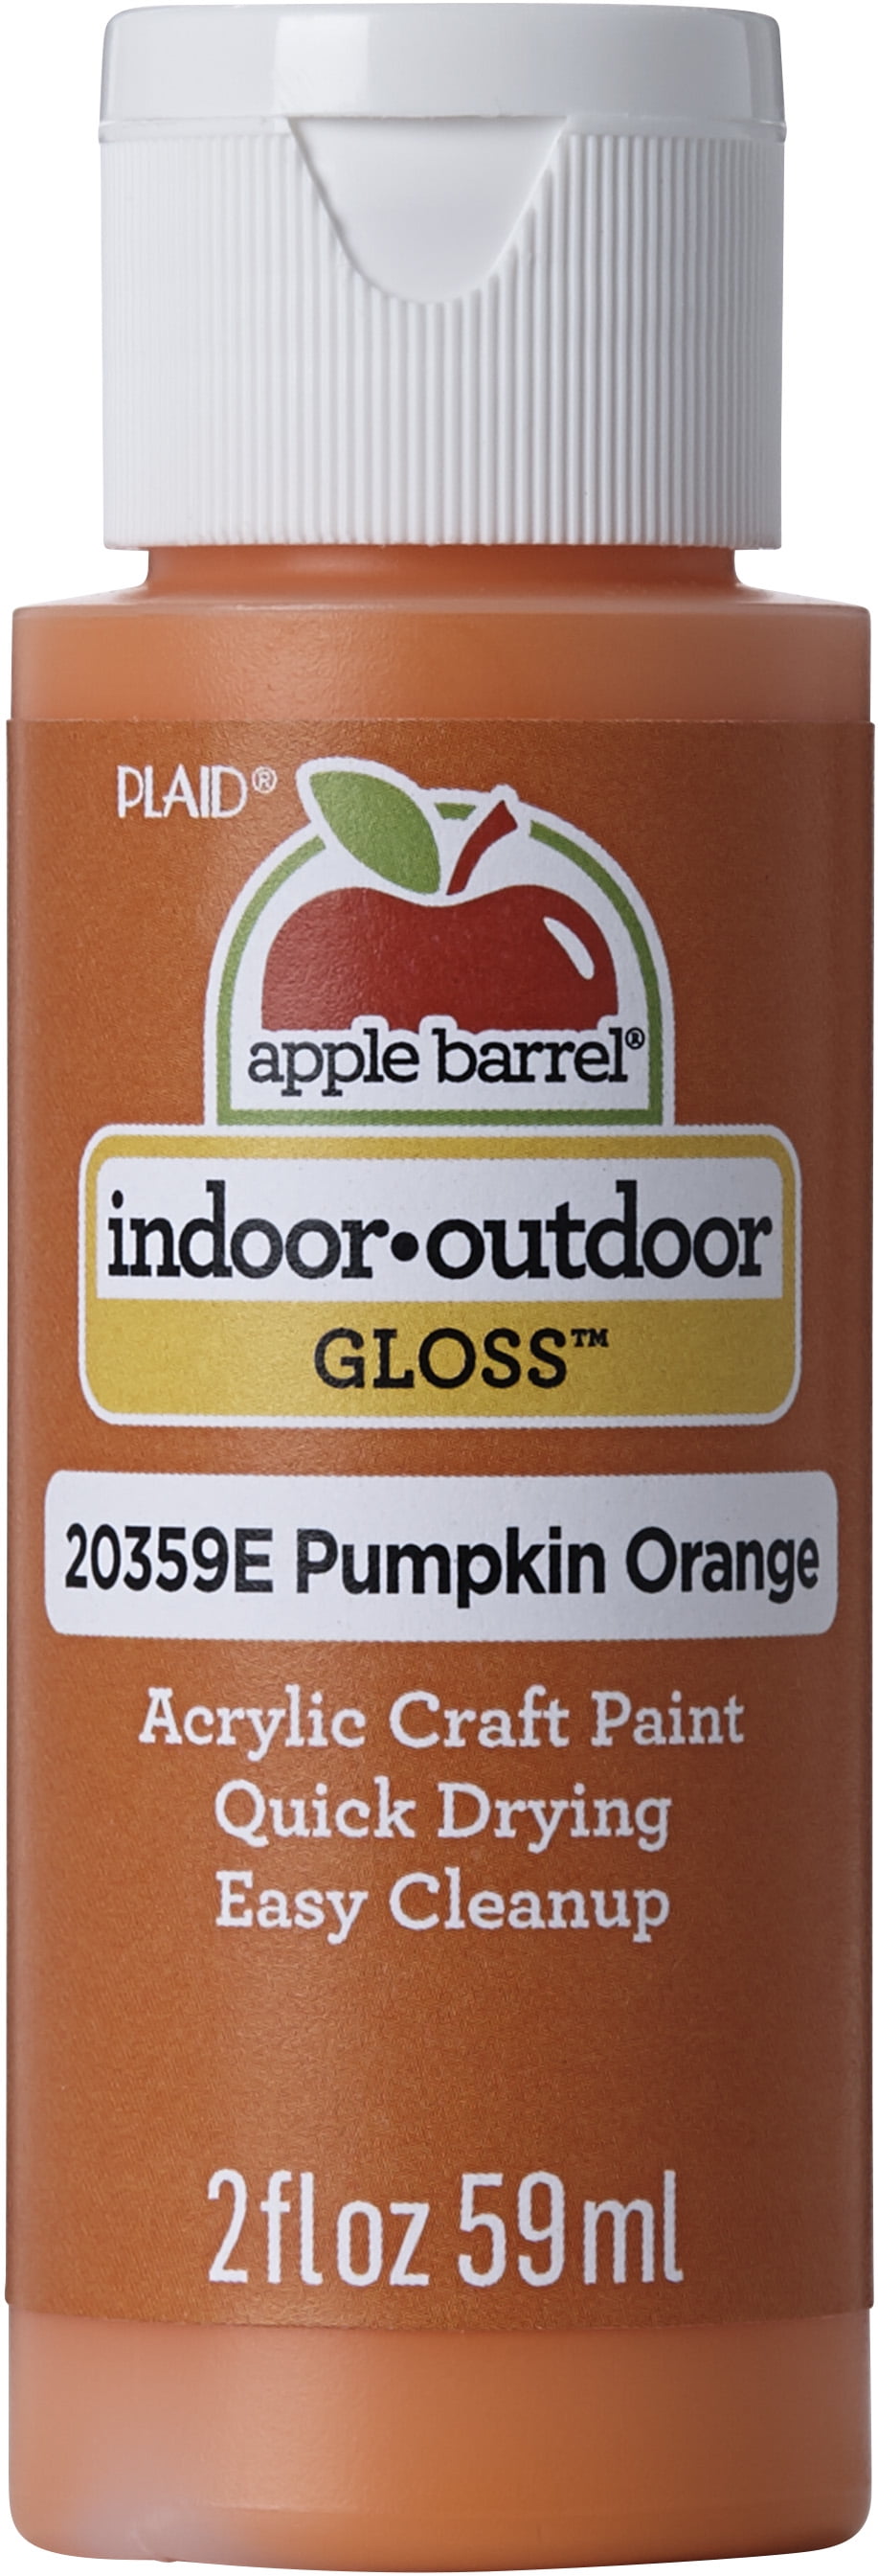 Apple Barrel Acrylic Craft Paint, Gloss Finish, Pumpkin Orange, 2 fl oz